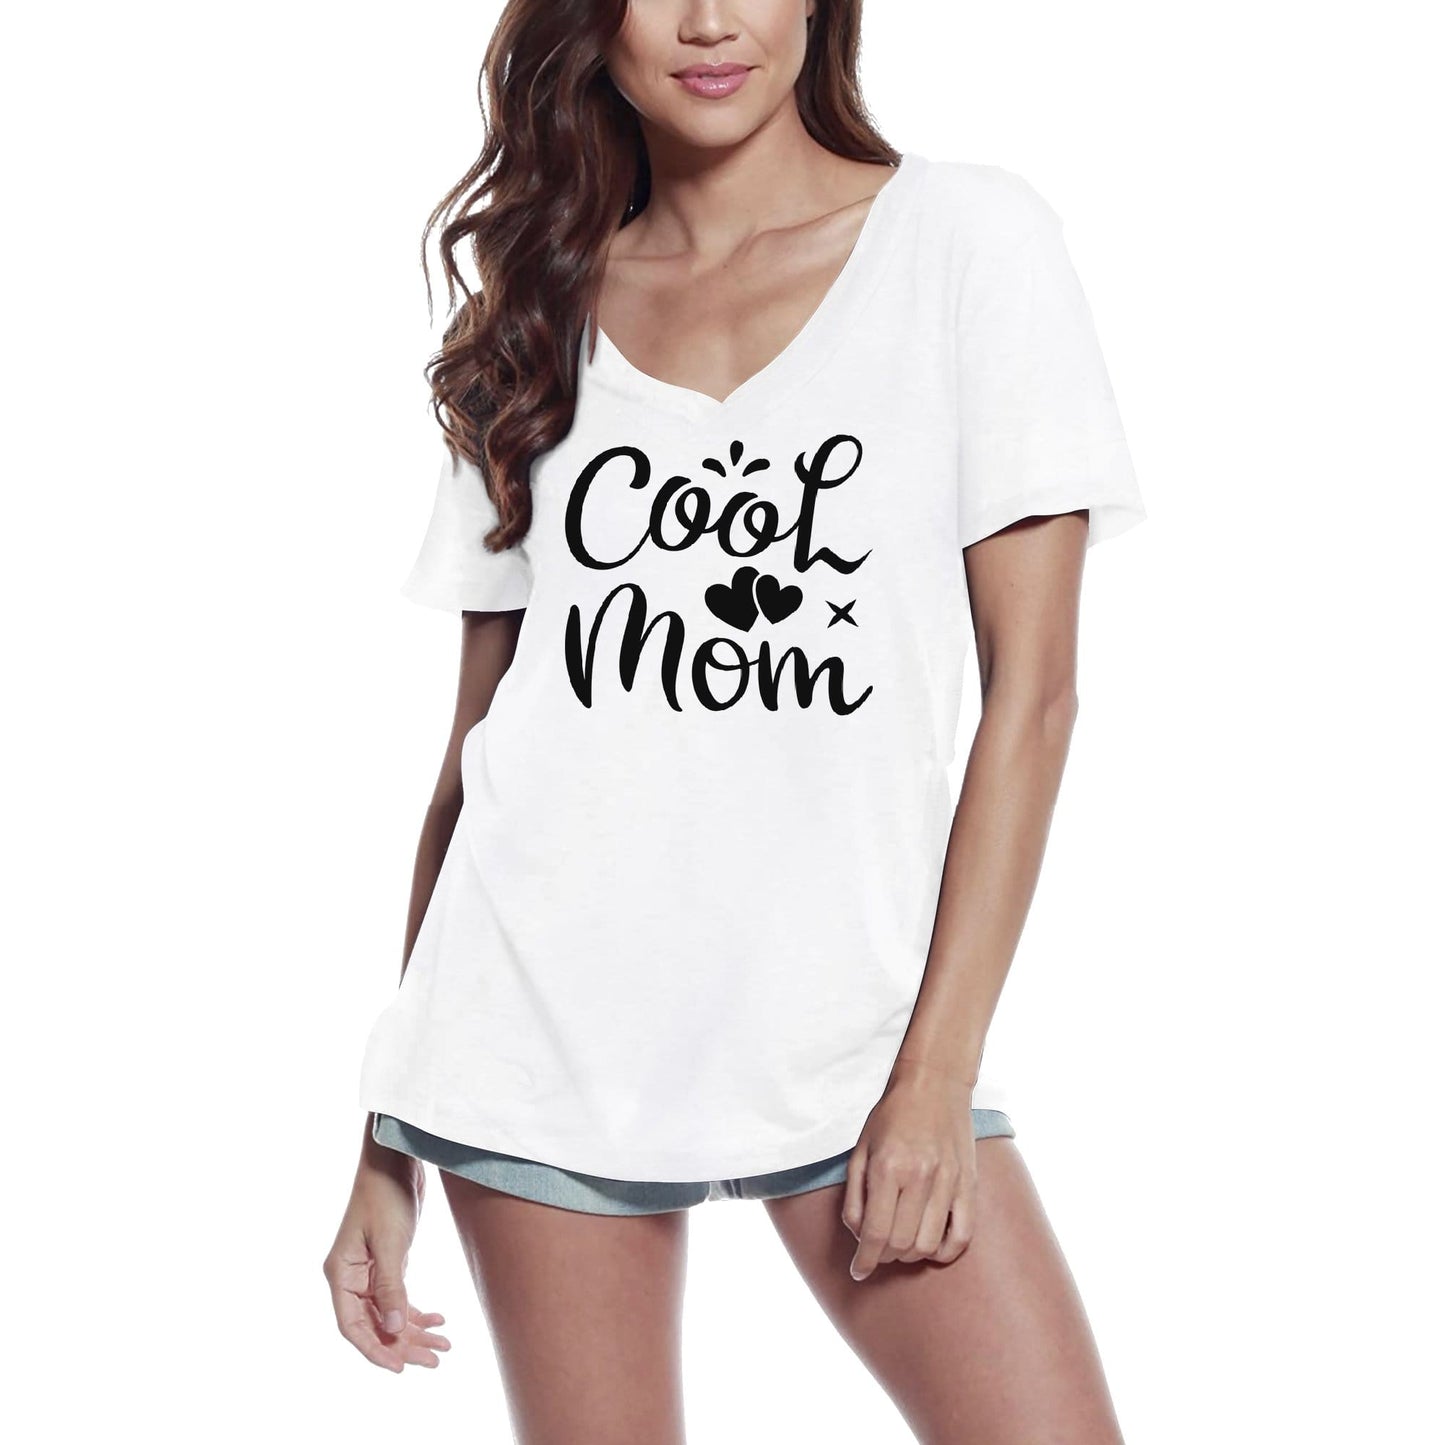 ULTRABASIC Women's T-Shirt Cool Mom - Mother's Gift Tee Shirt Tops